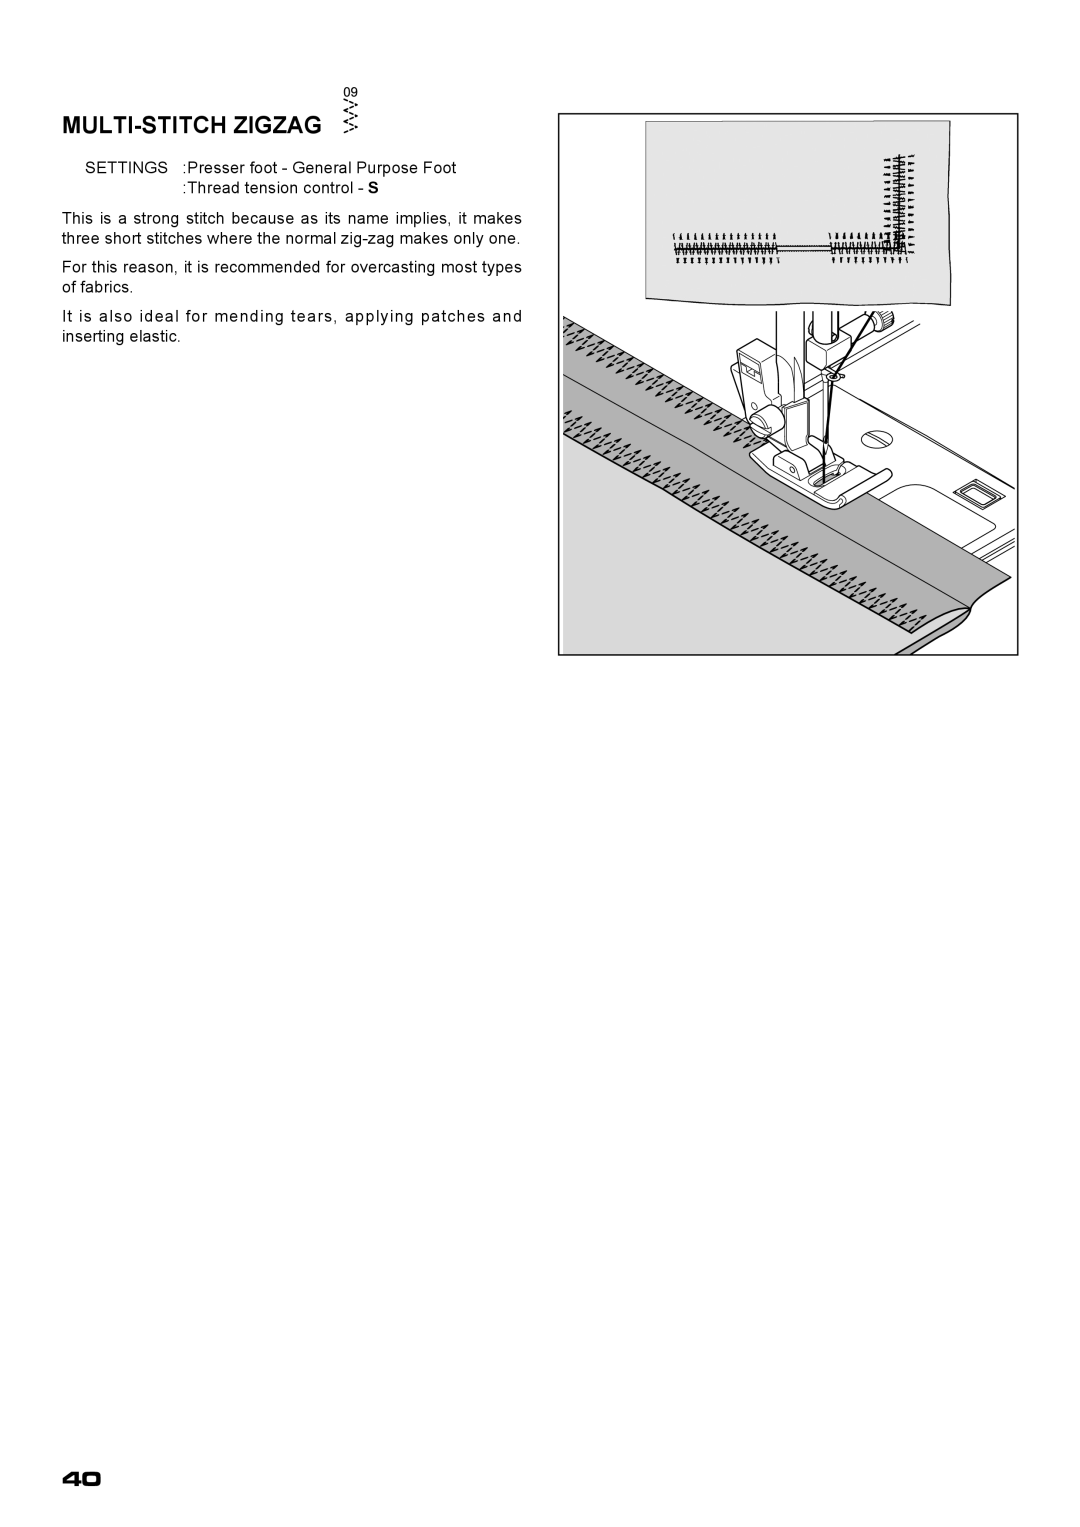 Singer XL-400 instruction manual Multi-Stitch Zigzag 